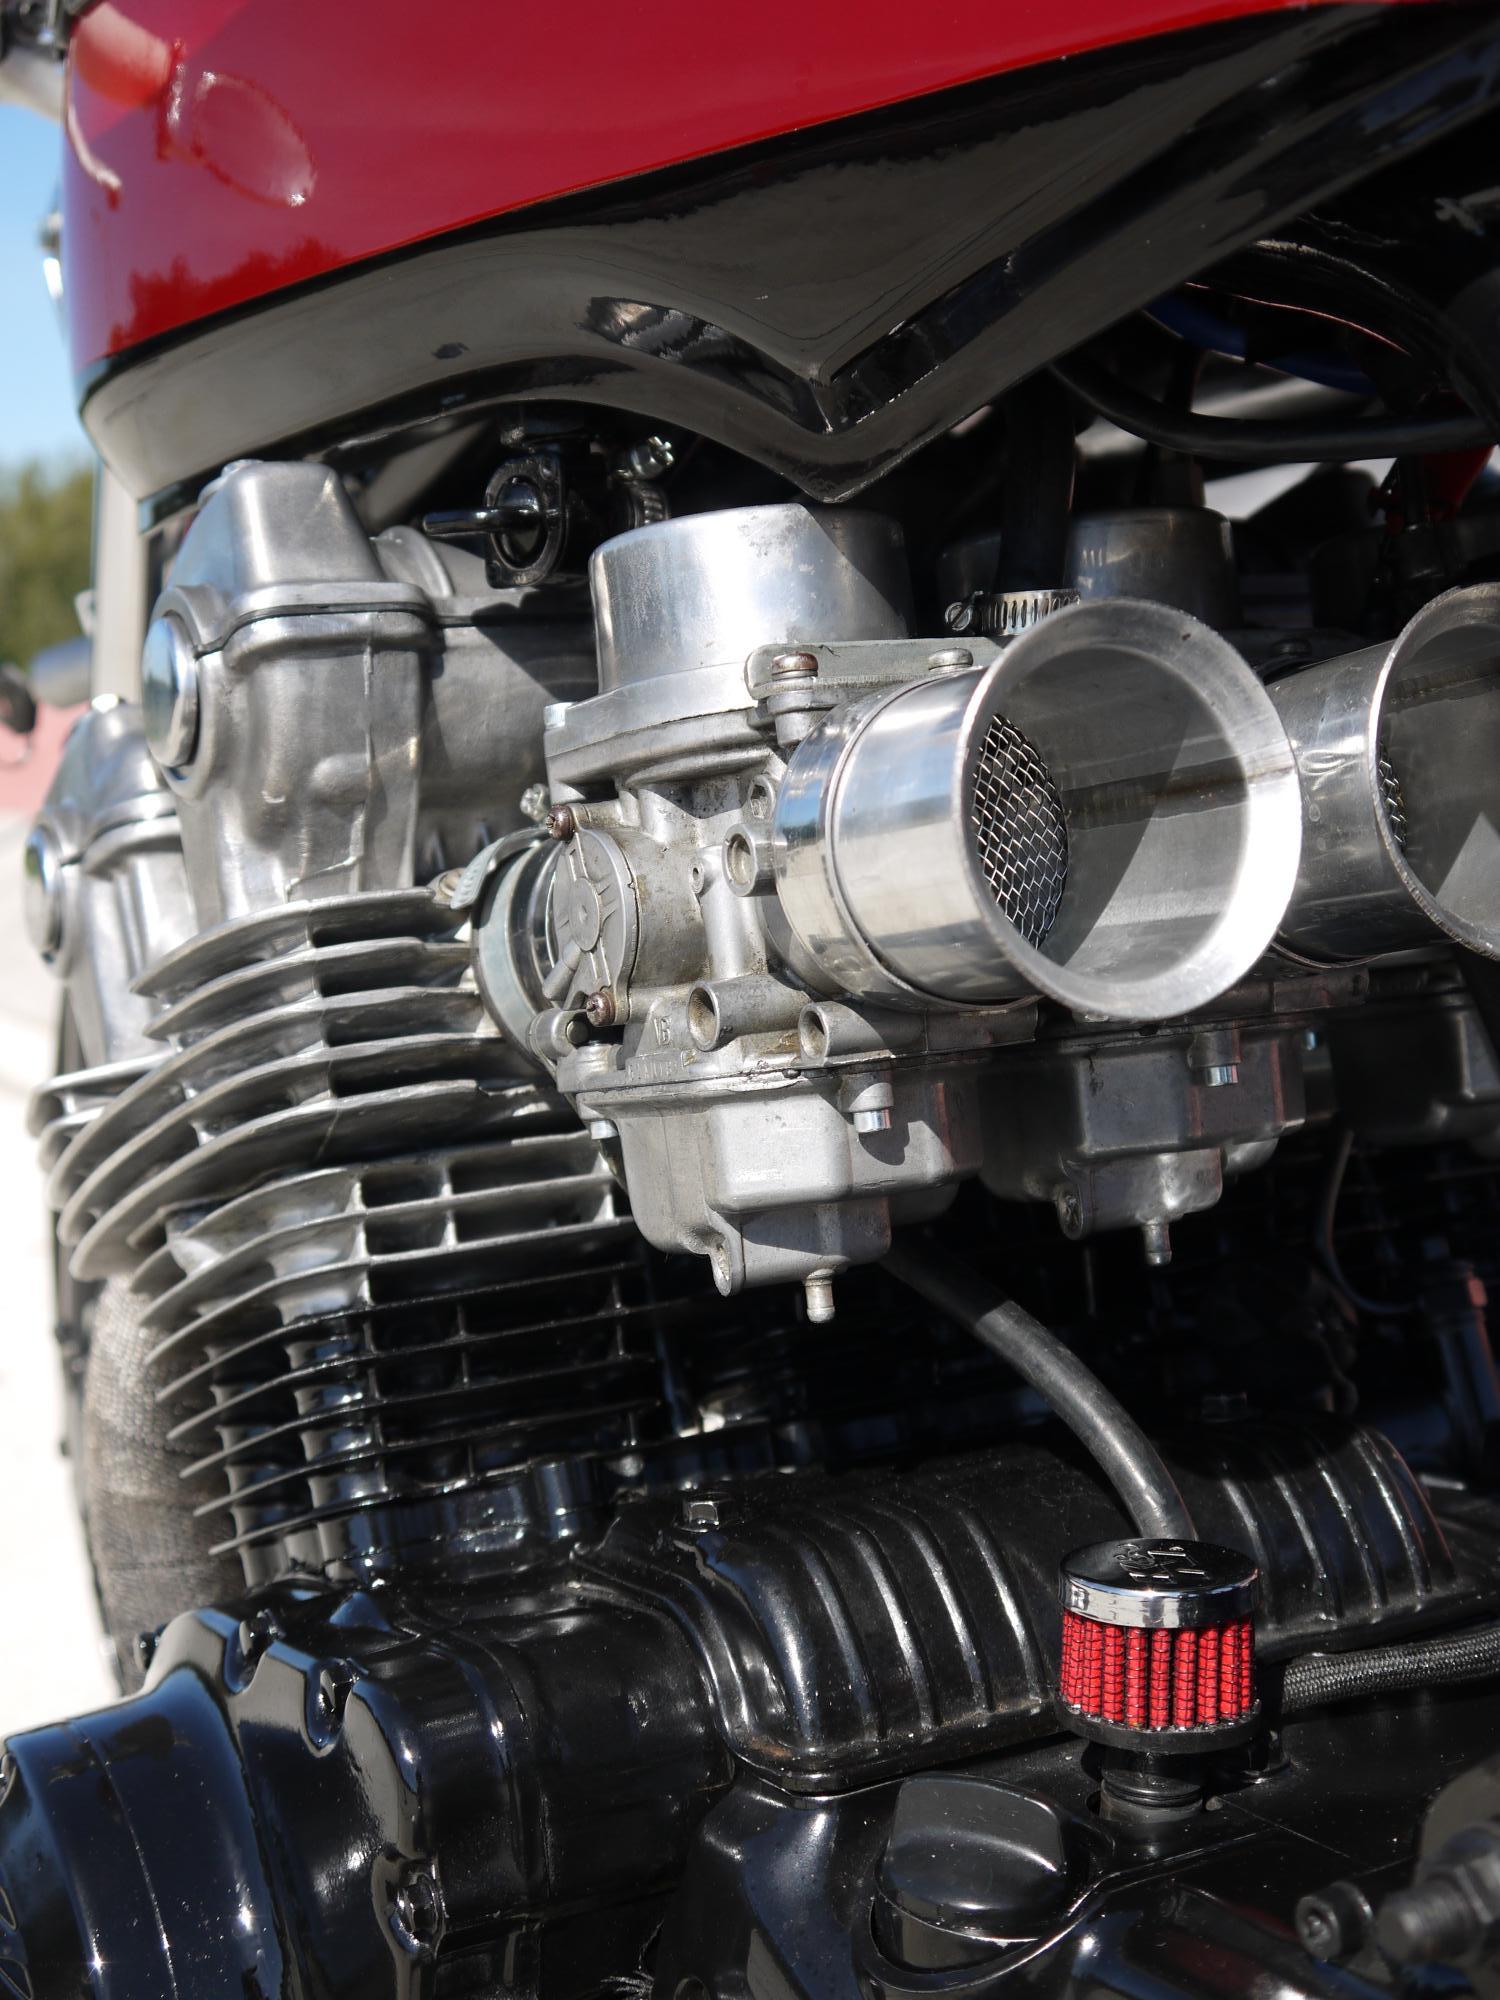 Honda CB 750K by Ugly Motors - TheArsenale